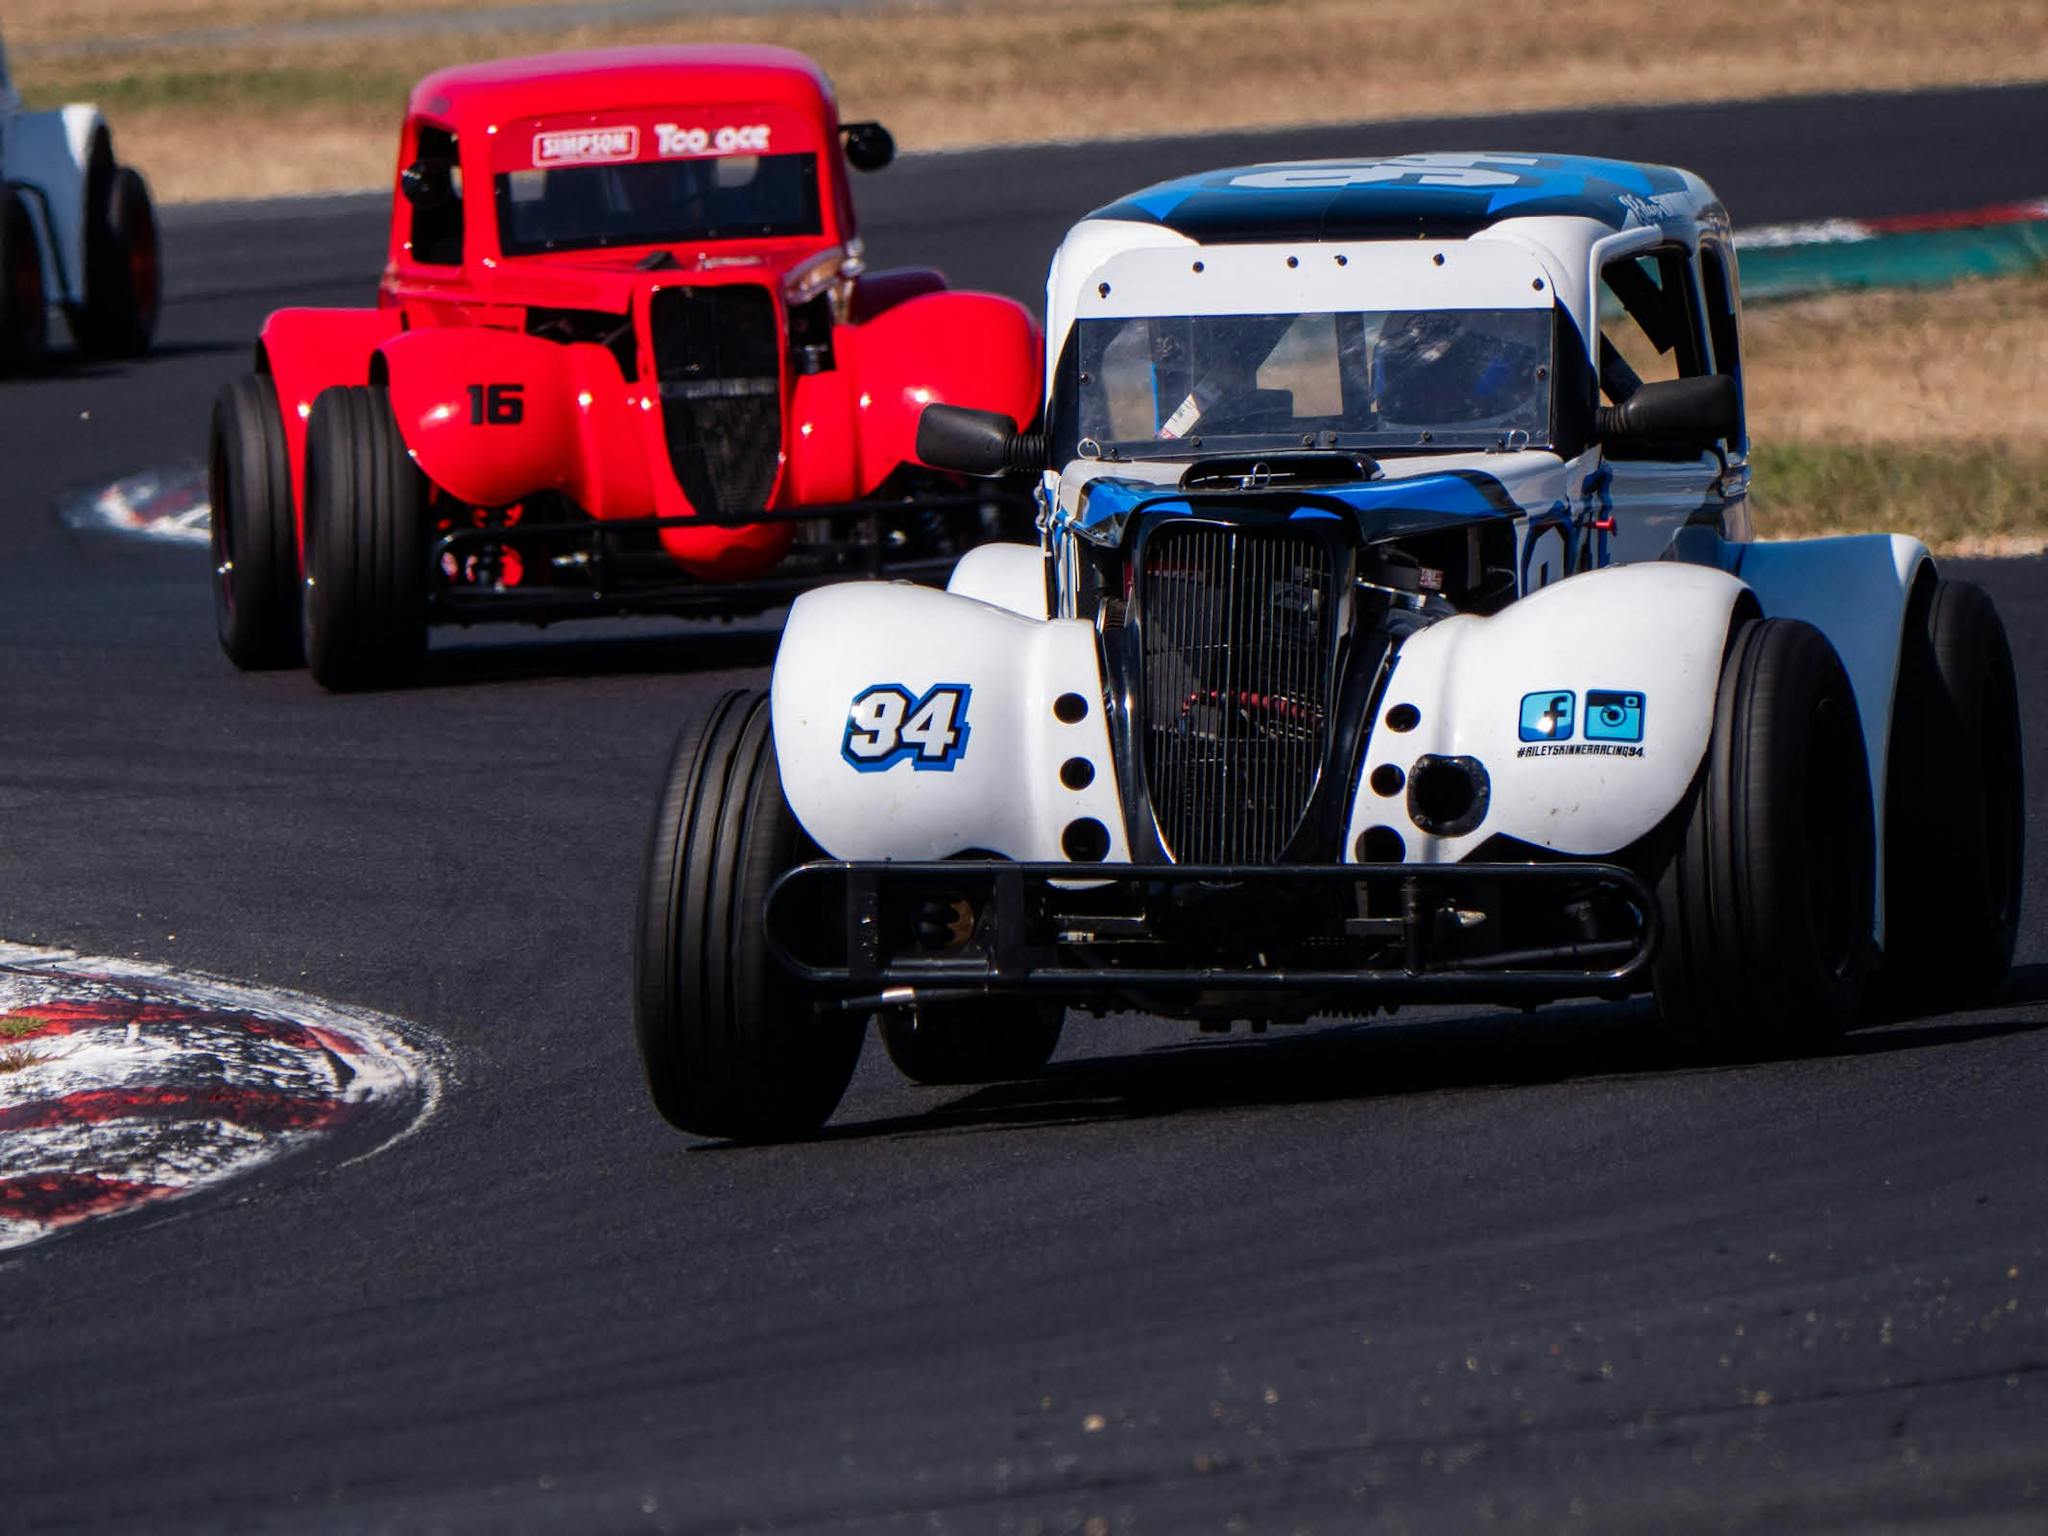 Two legend cars racing around Winton Motor Raceway